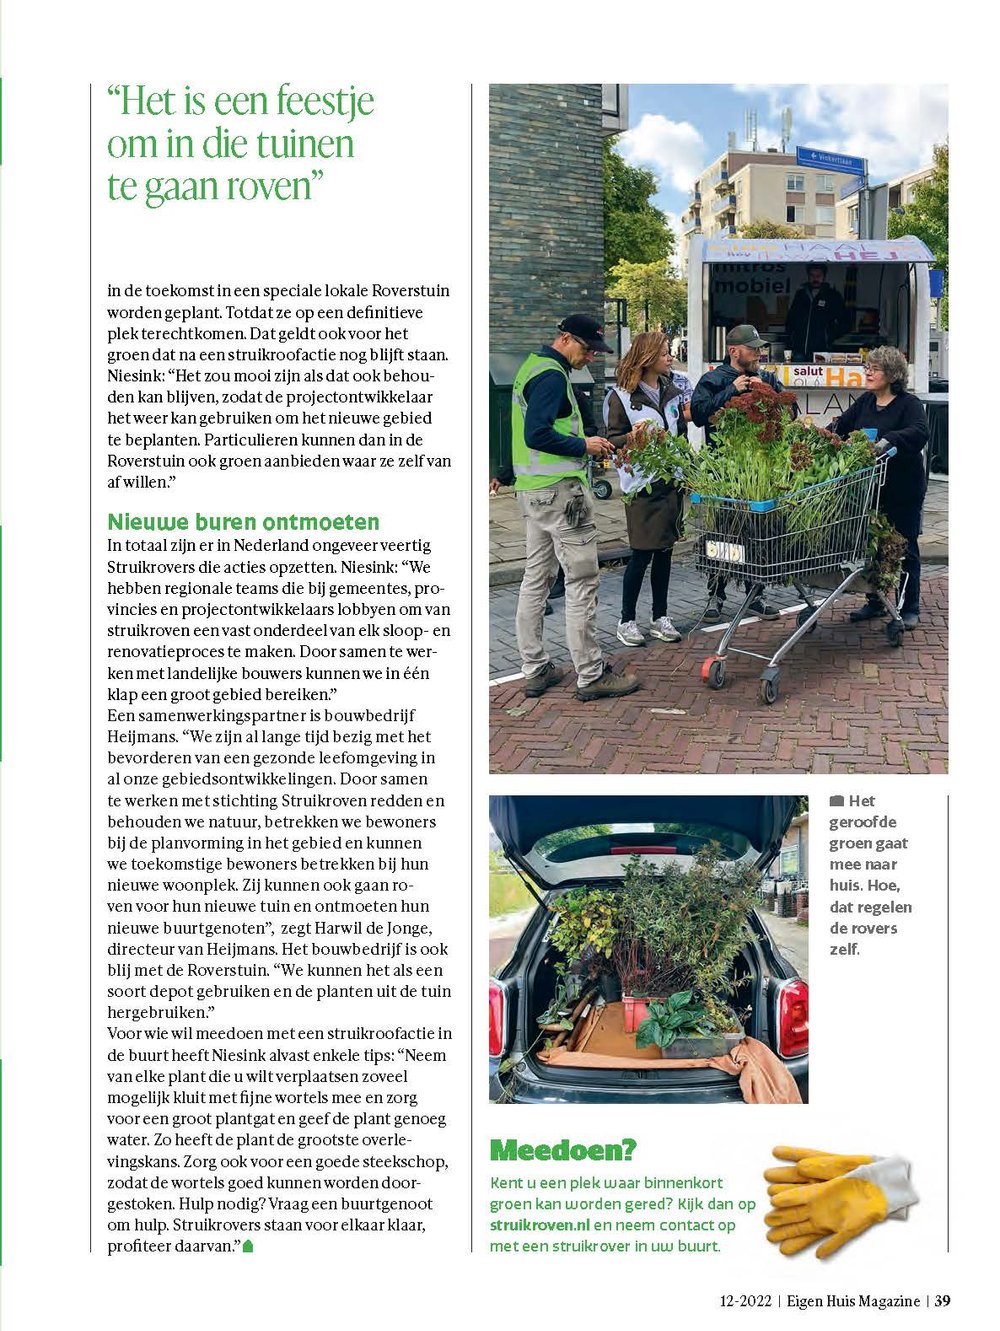 Struikroven in Eigen Huis Magazine_Pagina_5.jpg